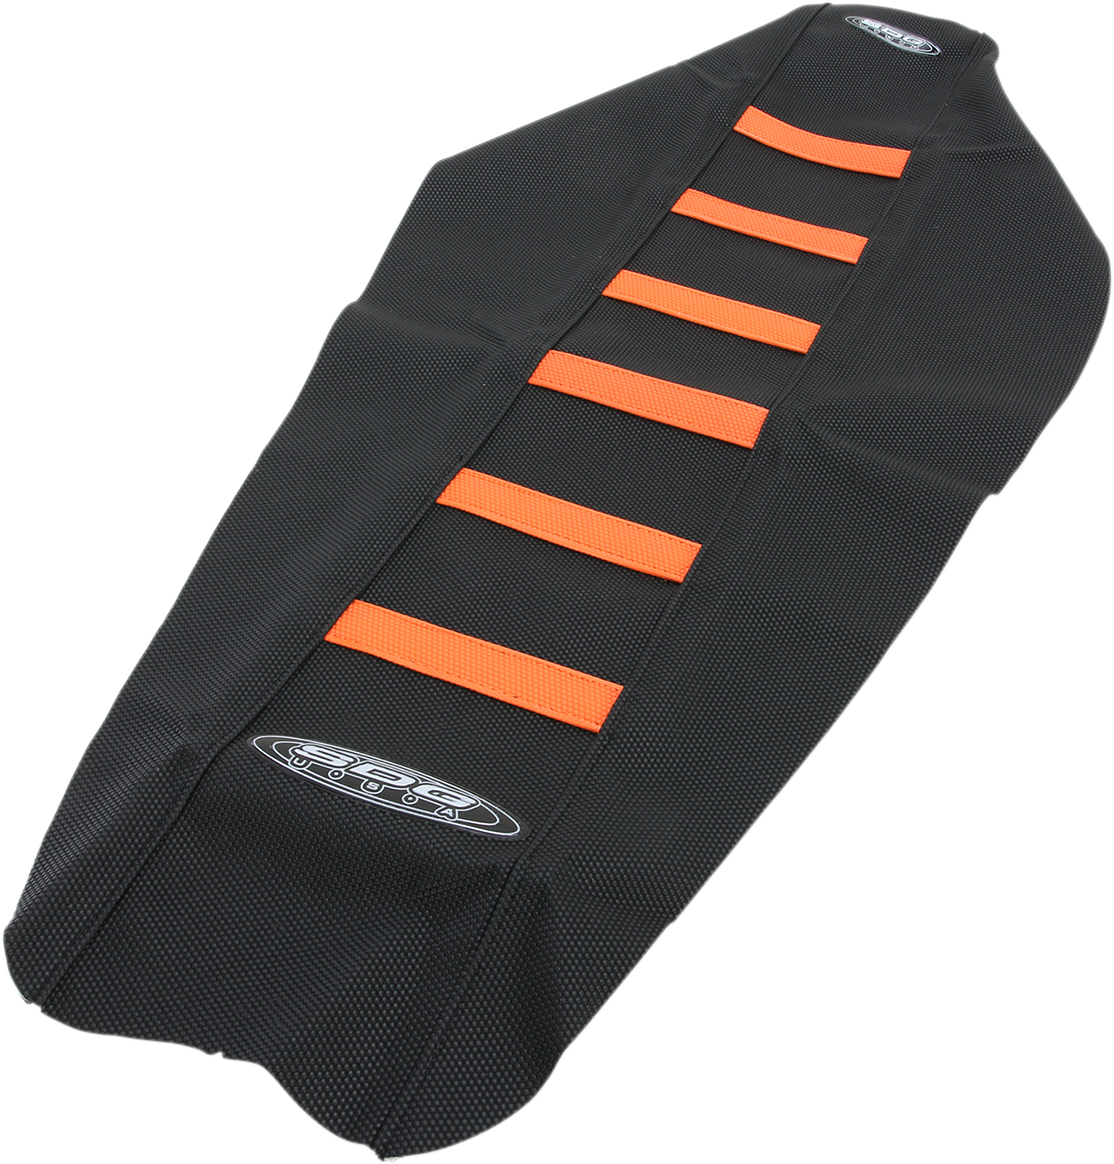 SDG 6-Ribbed Seat Cover - Orange Ribs/Black Top/Black Sides 95958OK